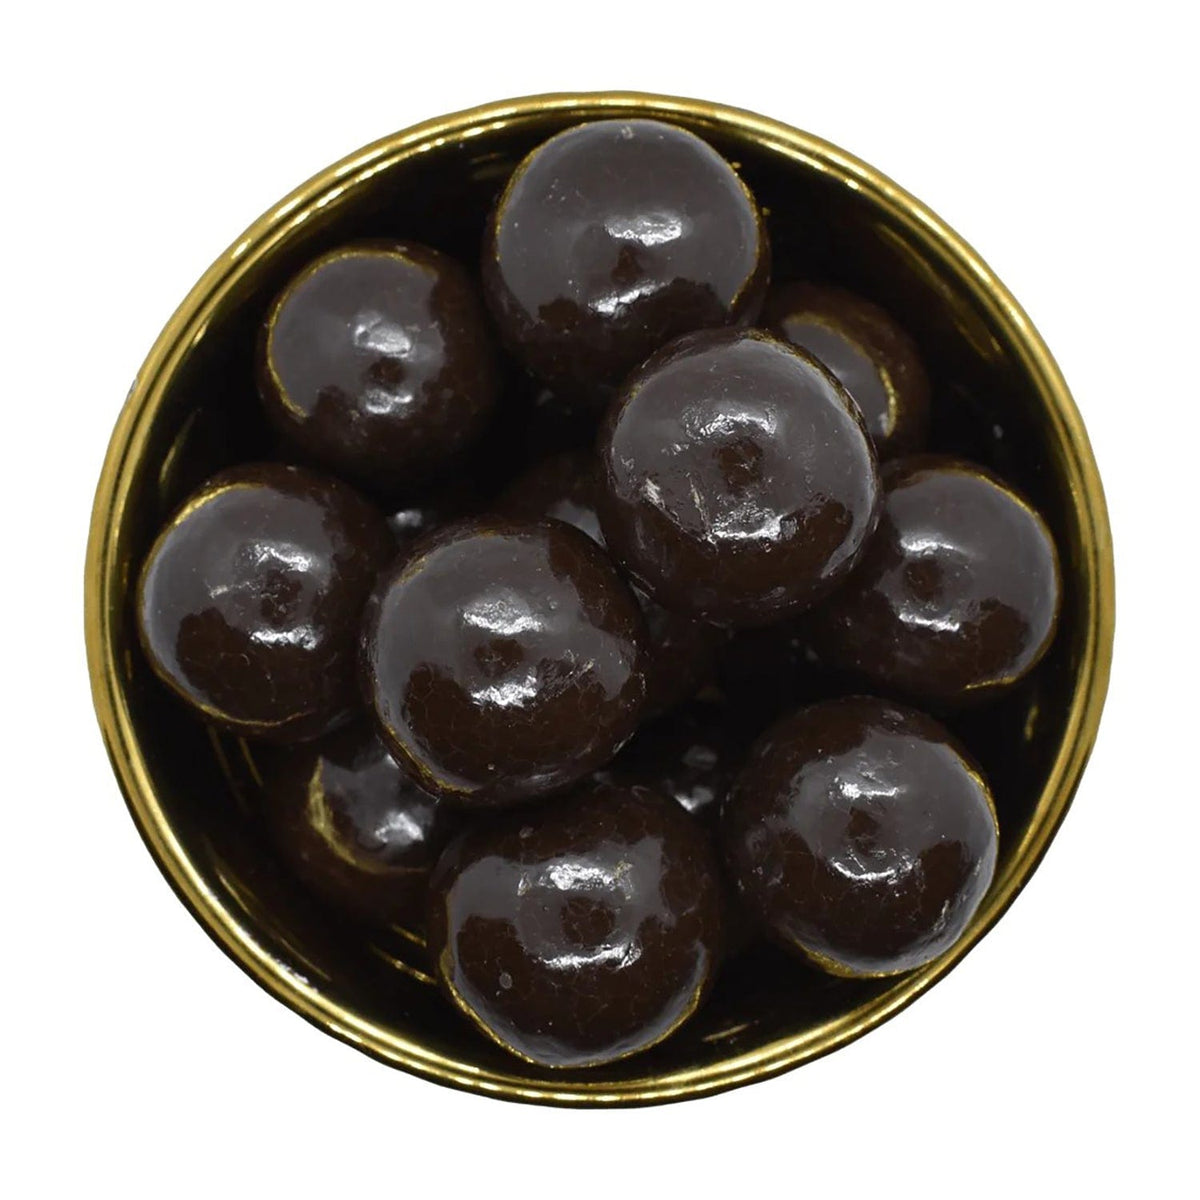 Lolli and Pops Bulk Dark Chocolate Malt Balls